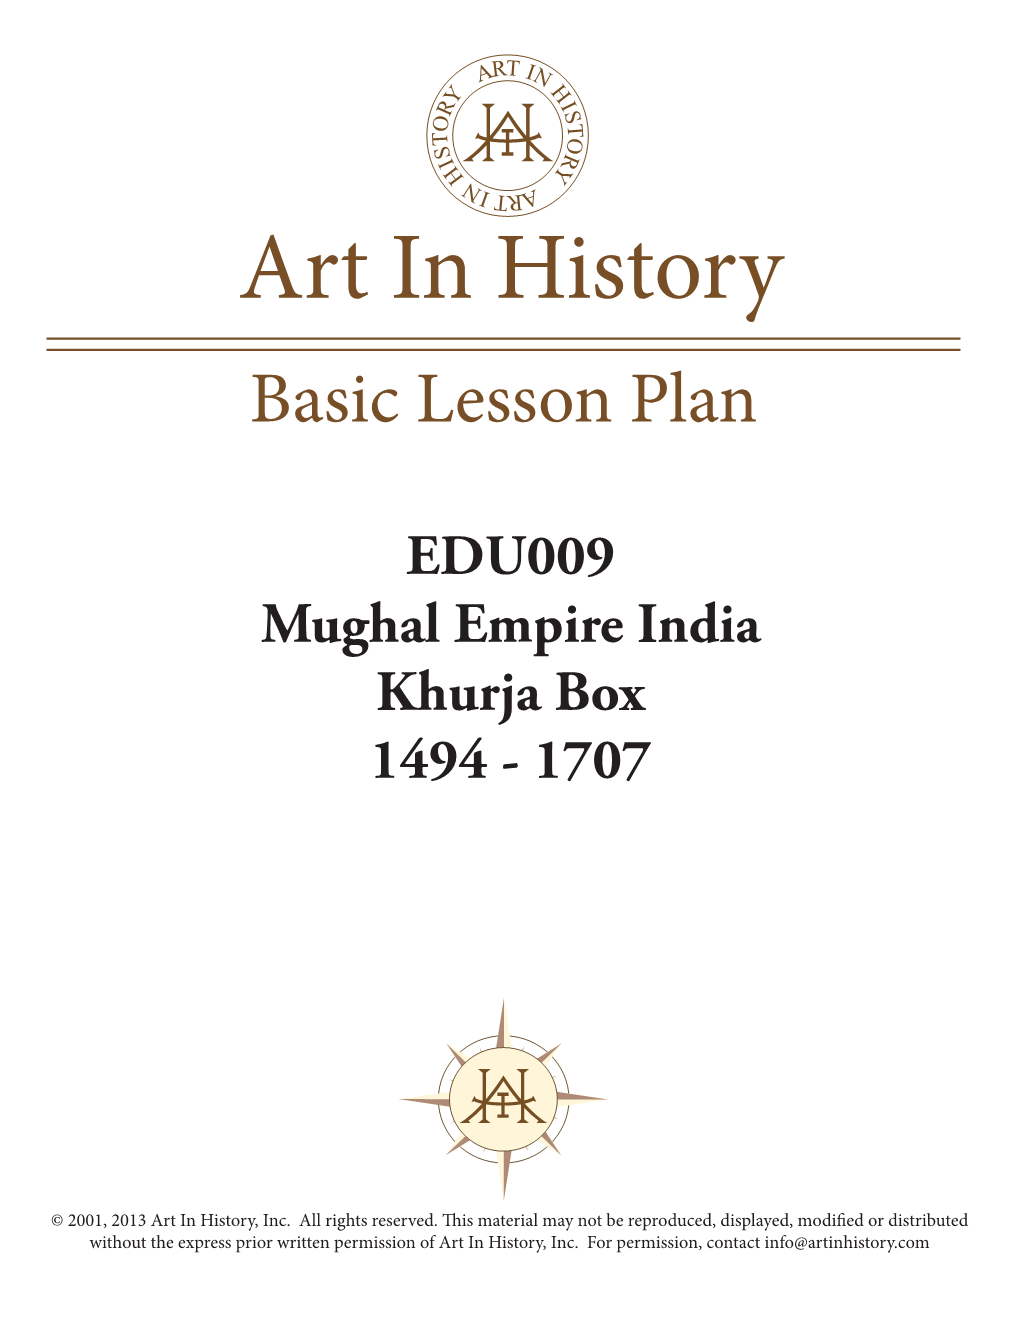 Art in History Basic Lesson Plan